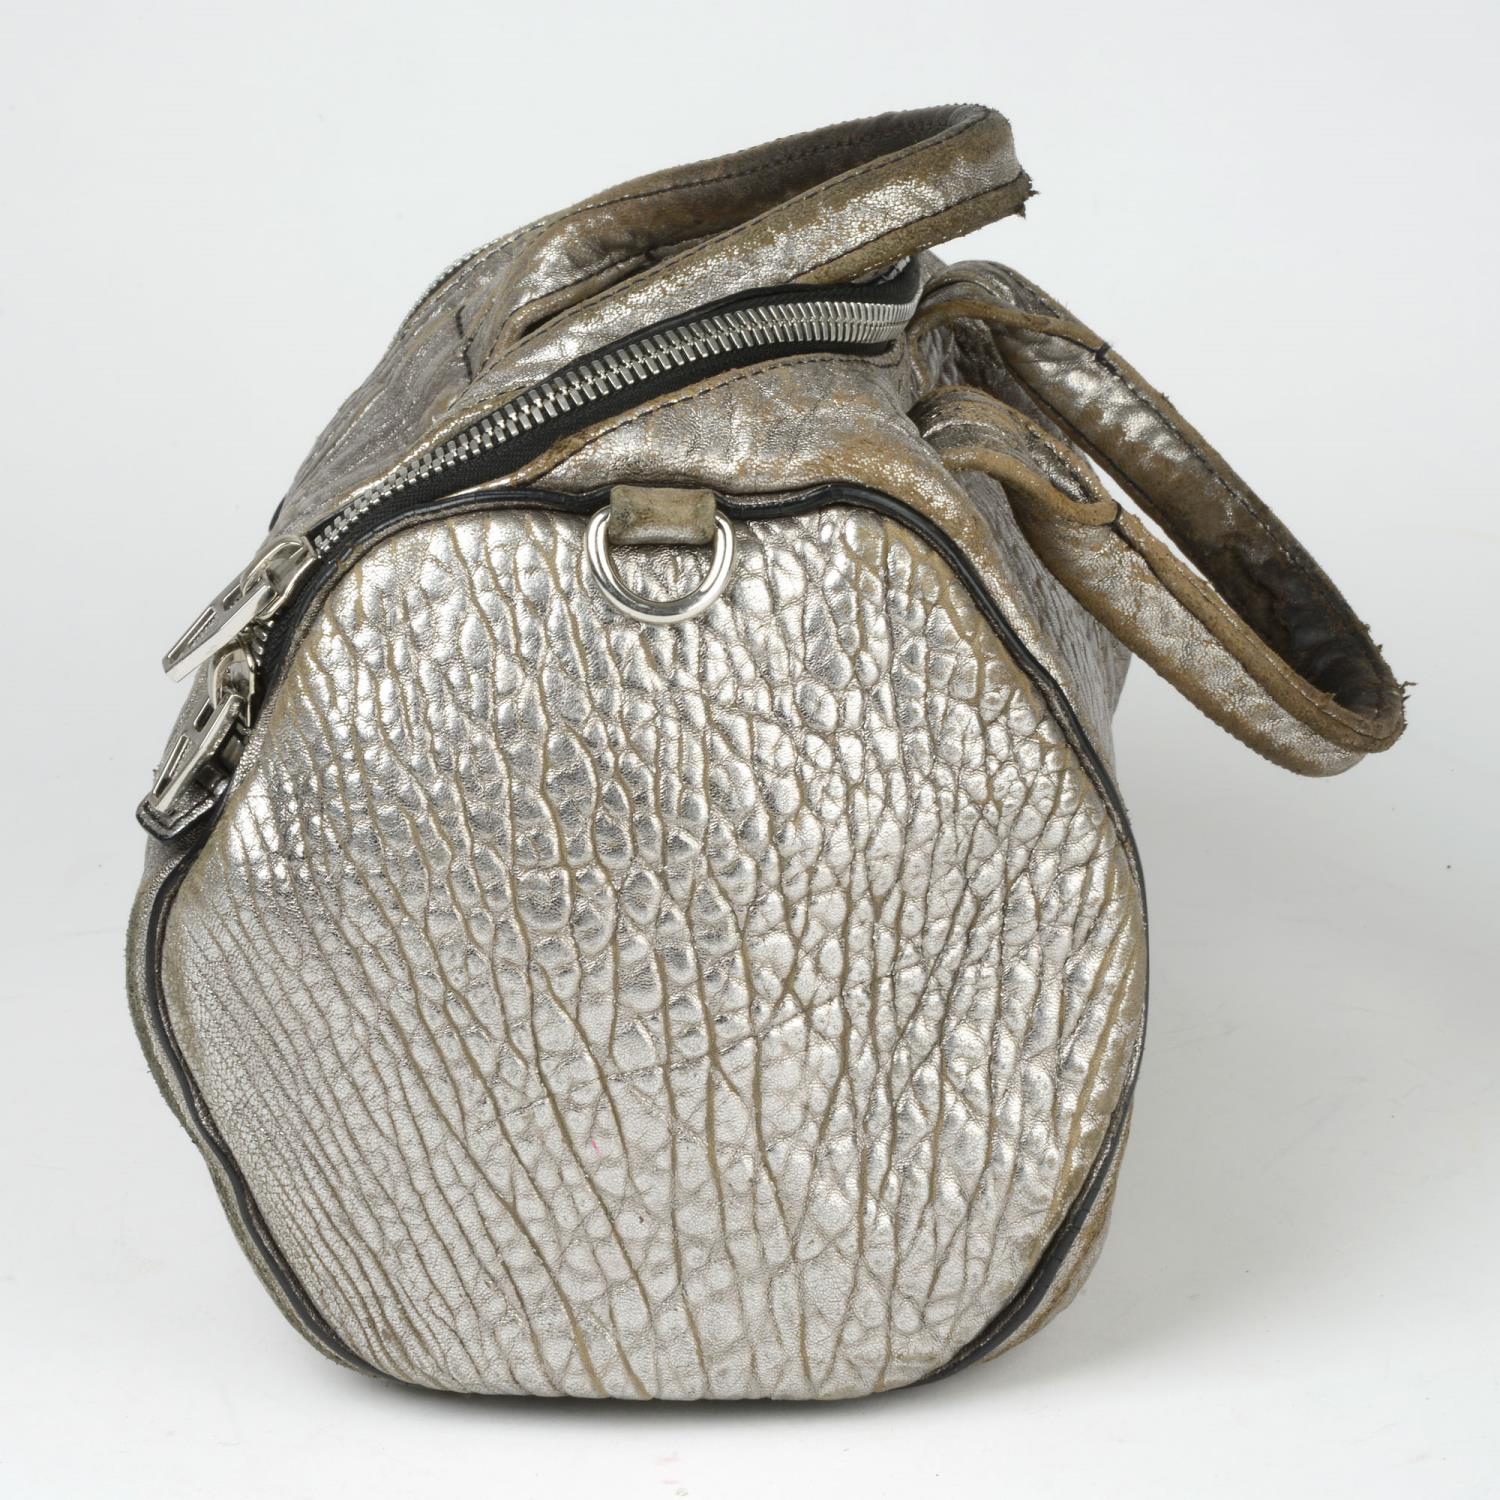 ALEXANDER WANG - a Rockie leather handbag. - Image 4 of 5